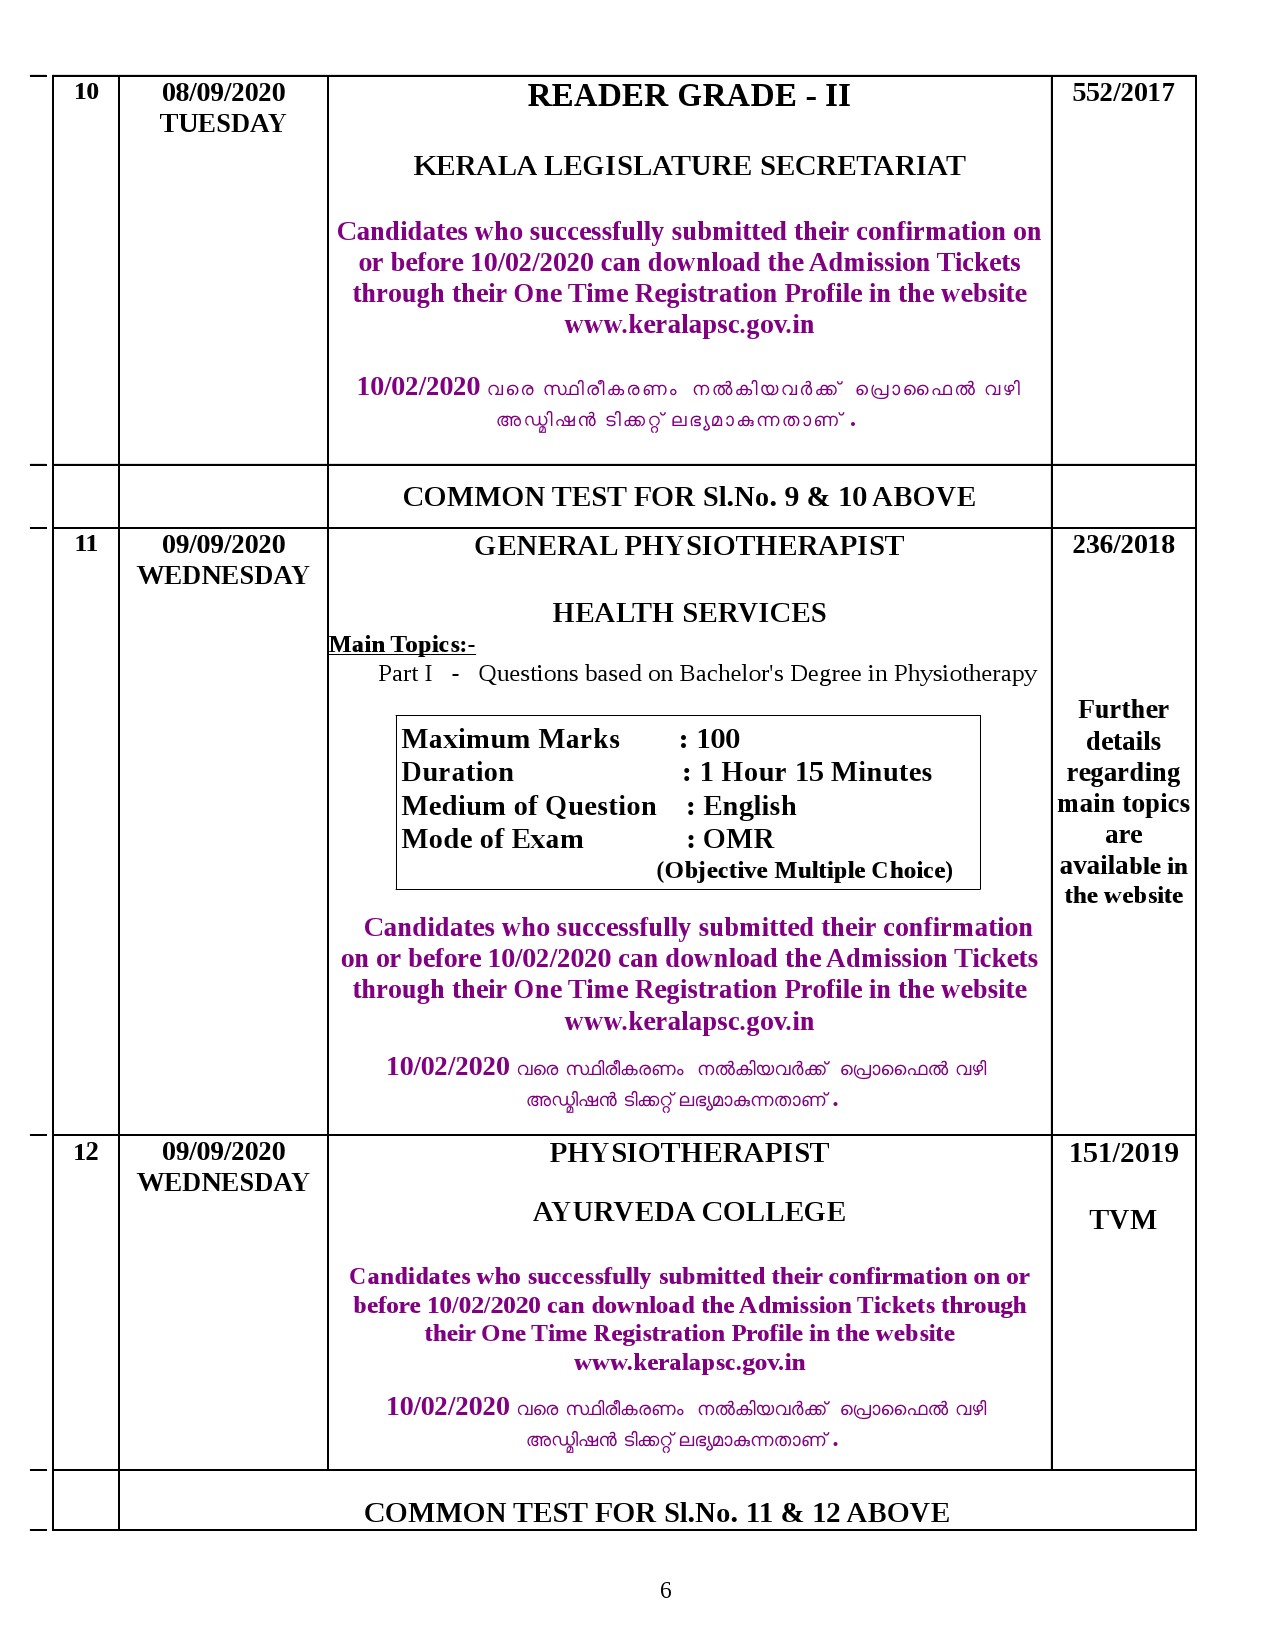 Kerala PSC Exam Calendar September 2020 - Notification Image 6